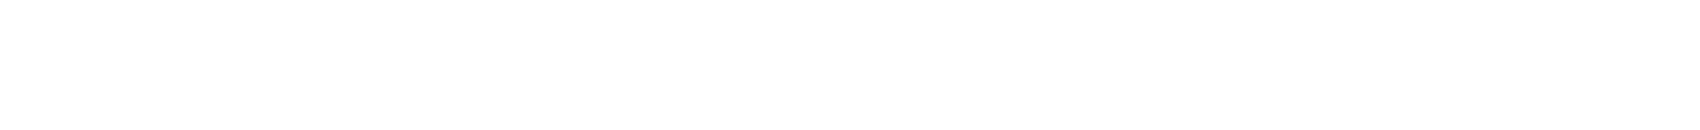 Department of Endocrinology &  Metabolism, Kanazawa University Graduate School of Medical Sciences